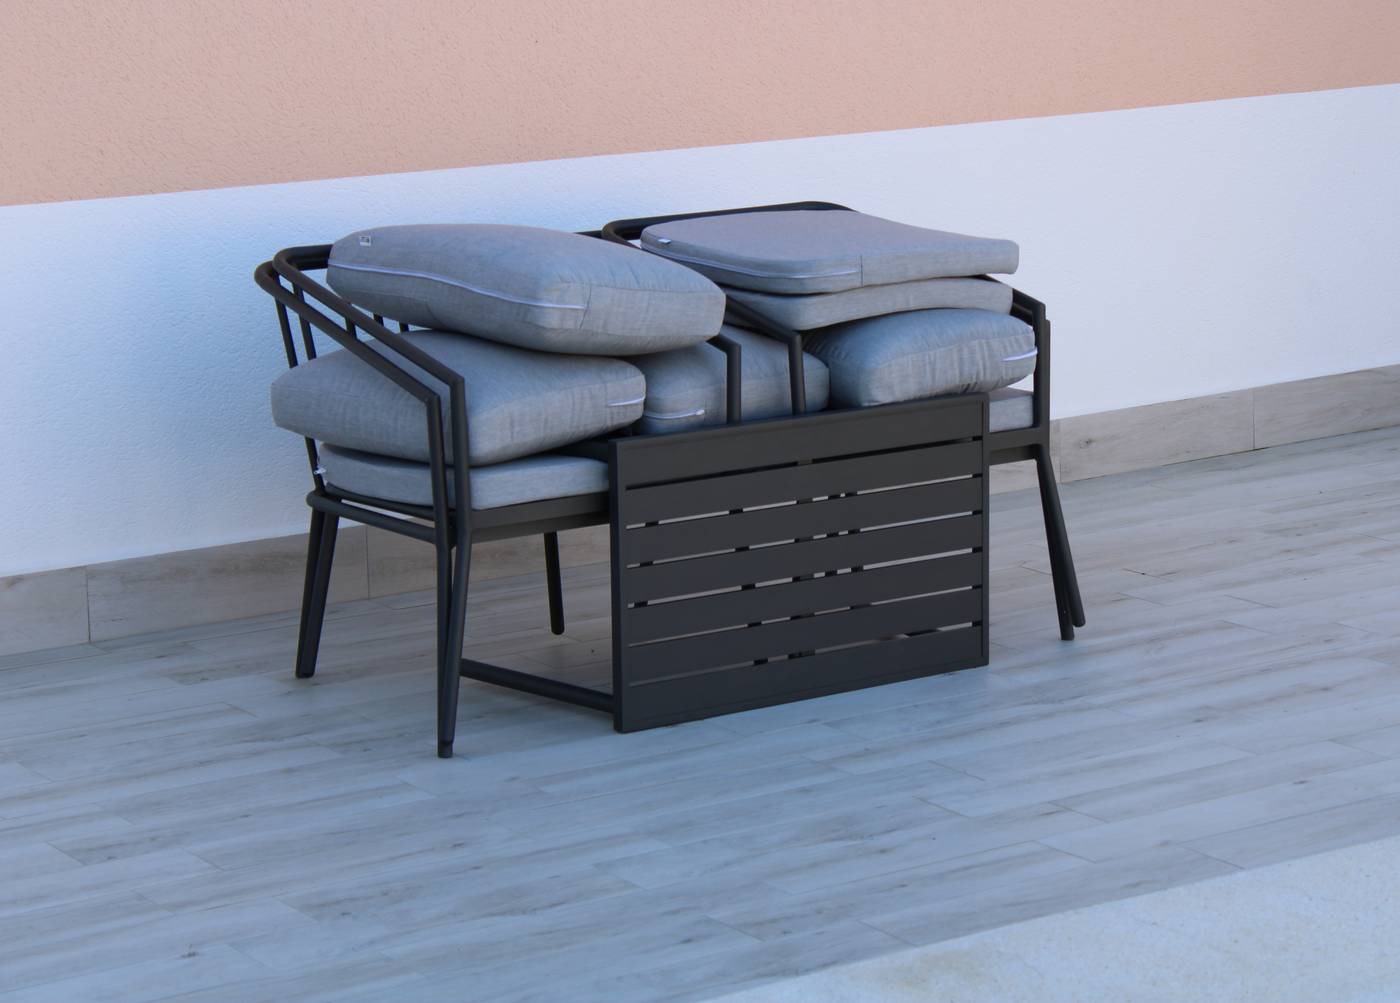 Set Aluminio Bermudas-7 - Conjunto: 1 sofá 2 plazas + 2 sillones + 1 mesa de centro. Estructura aluminio color blanco o antracita.